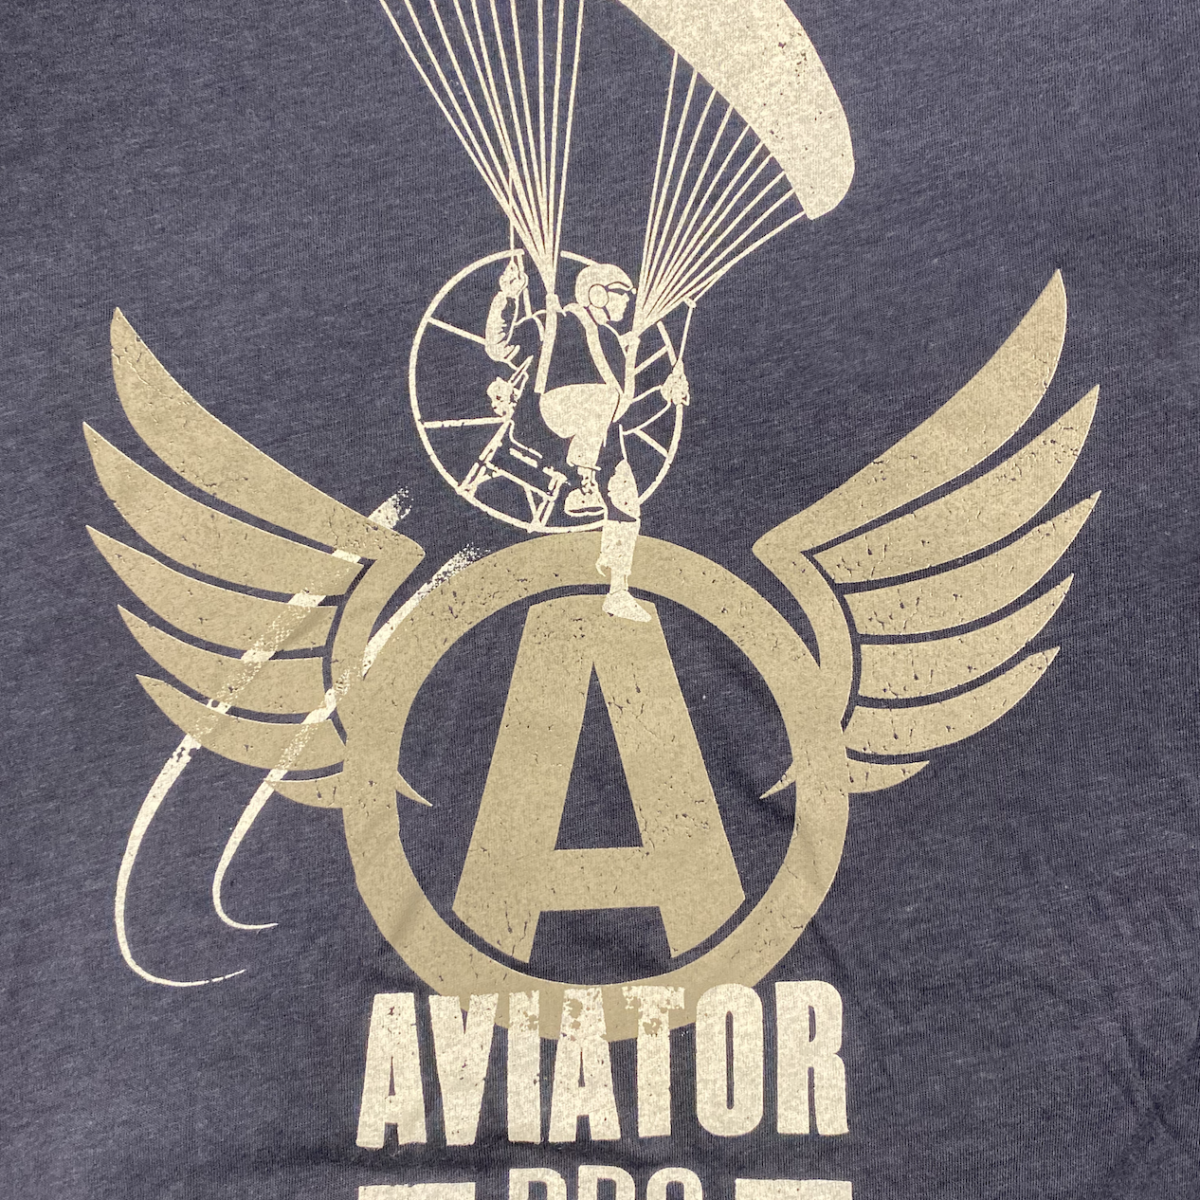 Aviator Fly Over Shirt